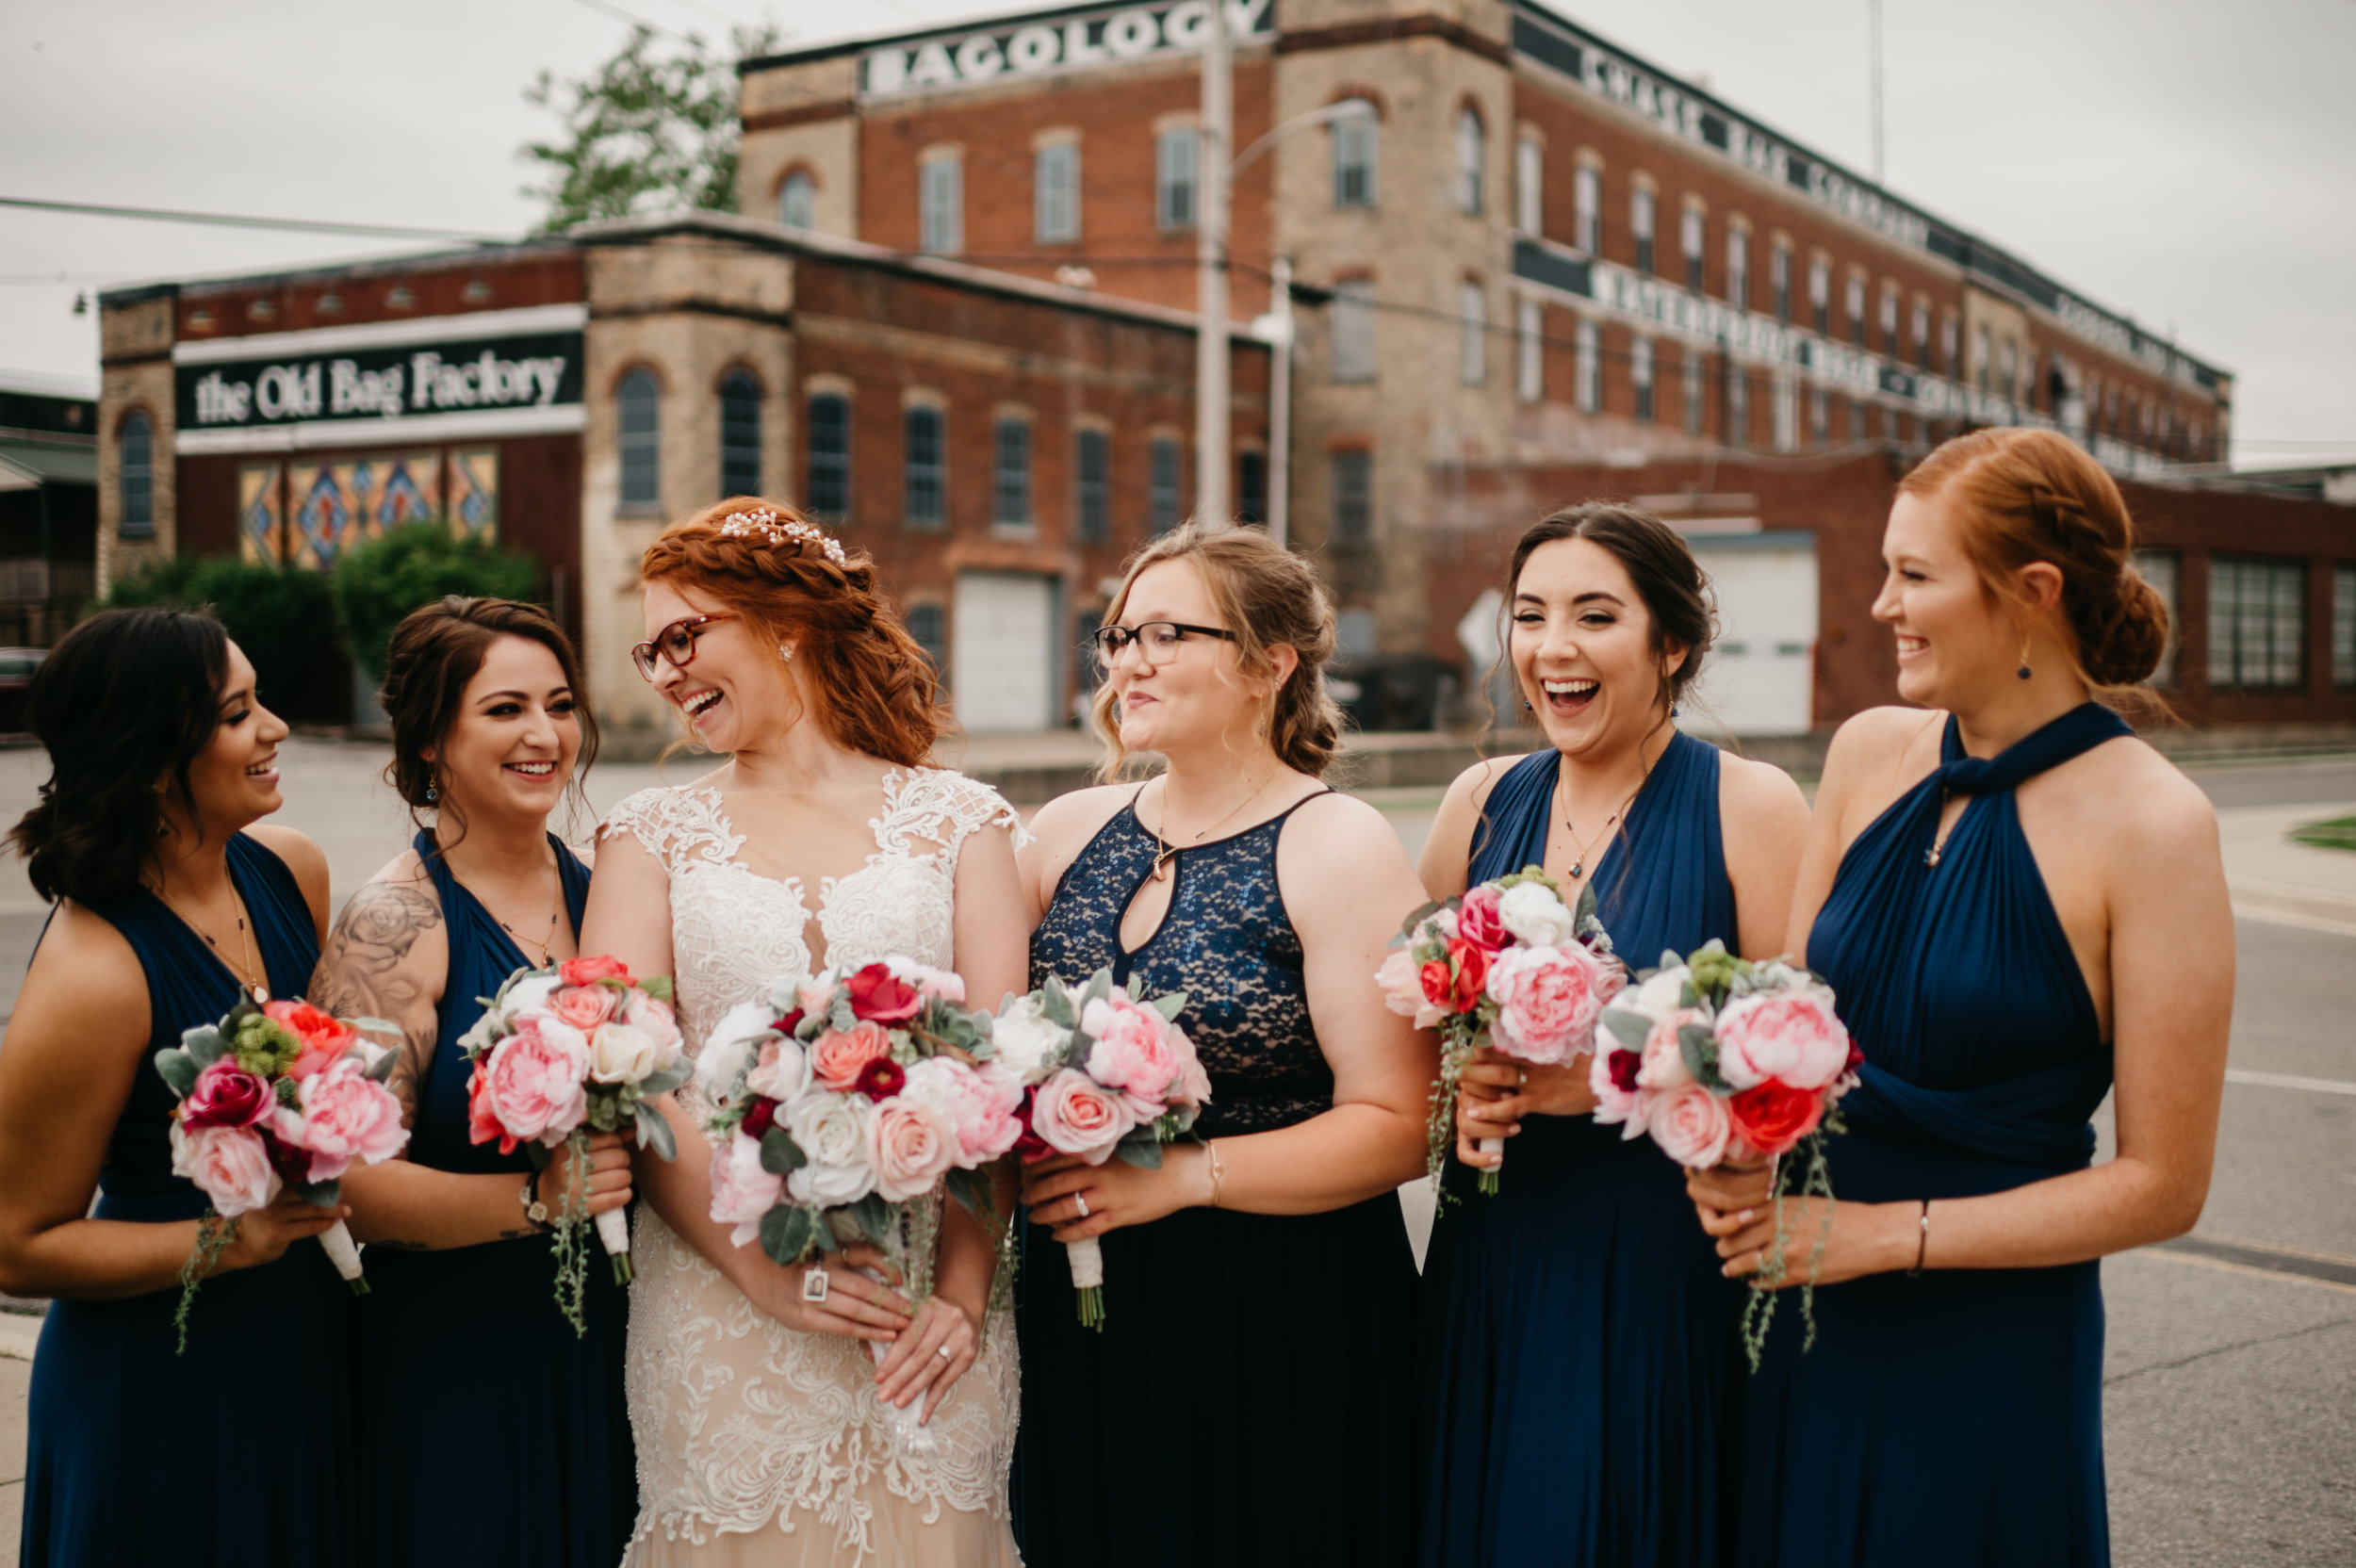 Bread &amp; Chocolate Goshen IN Wedding - Hey Sisters! Photography